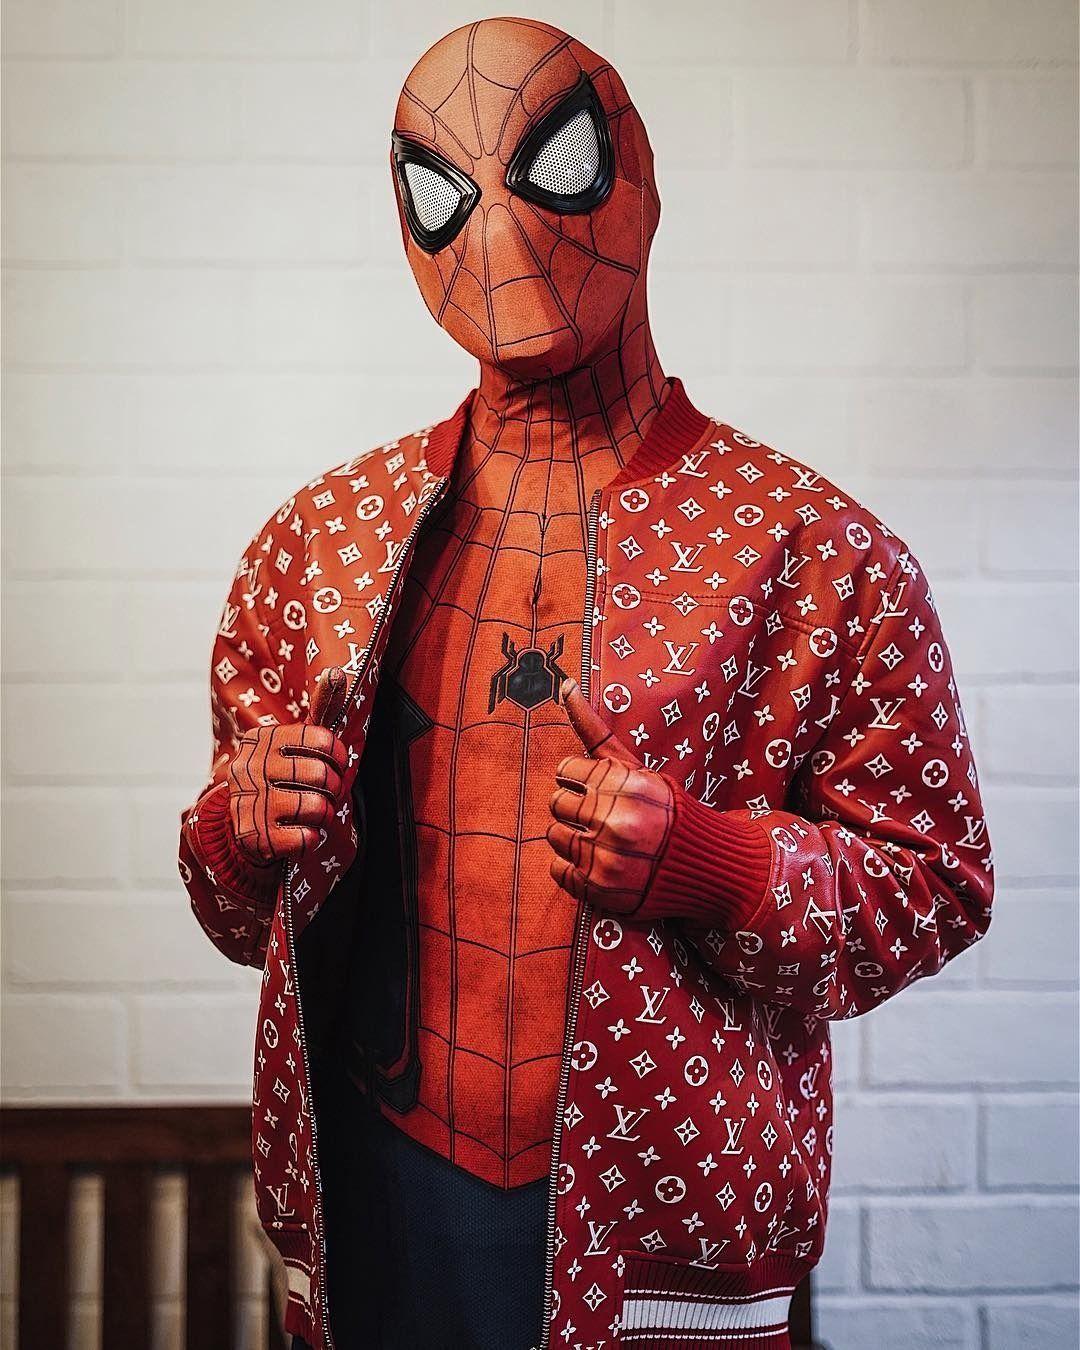 Spiderman in Supreme x Louis Vuitton Bomber Jacket in 2019